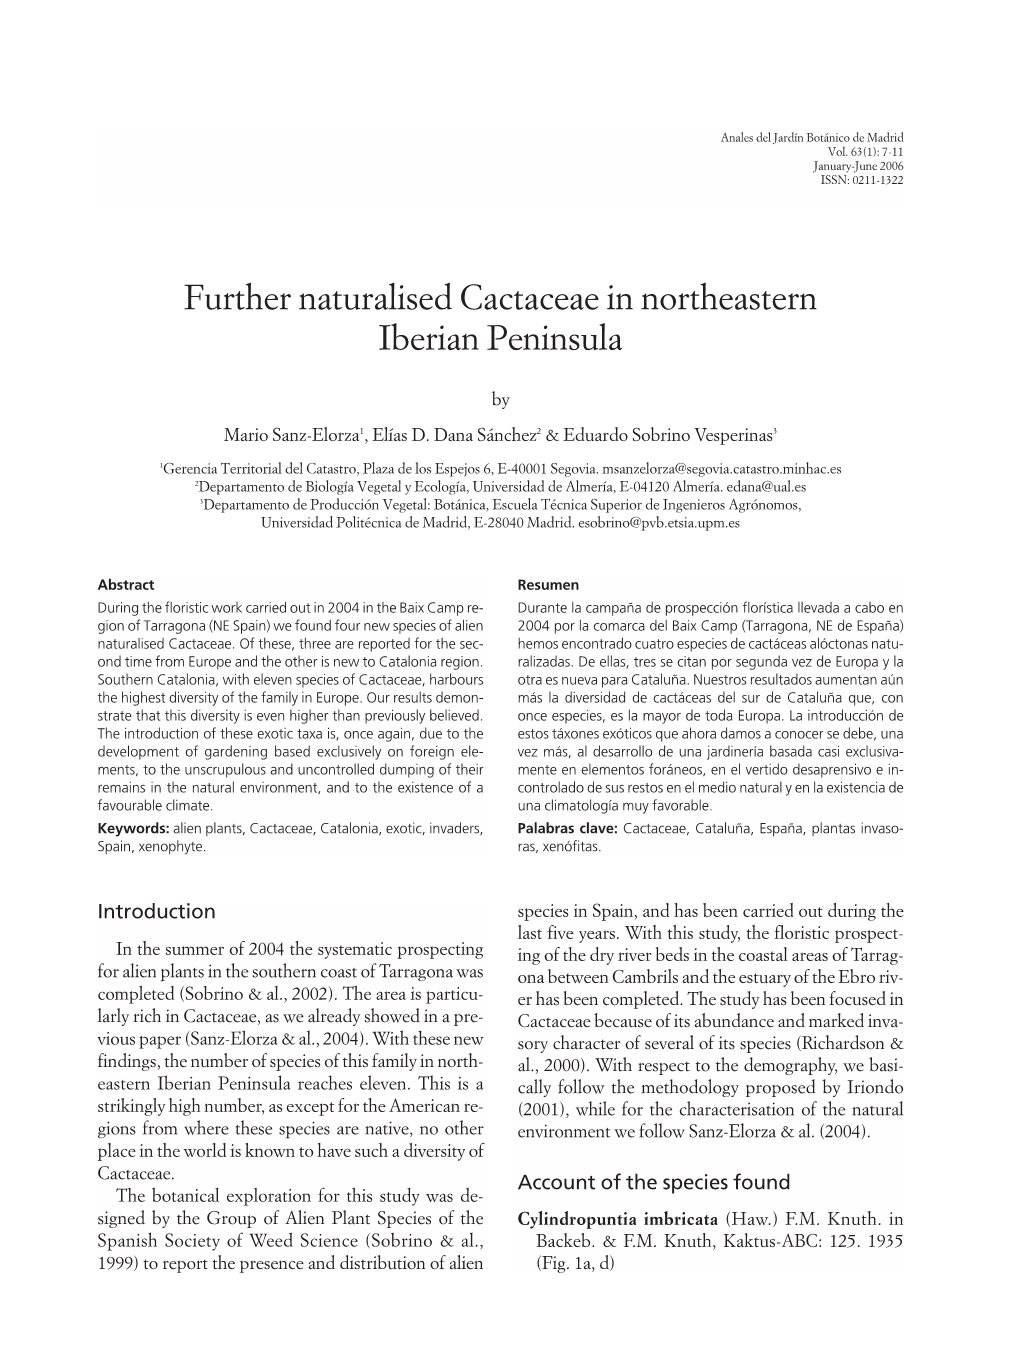 Further Naturalised Cactaceae in Northeastern Iberian Peninsula